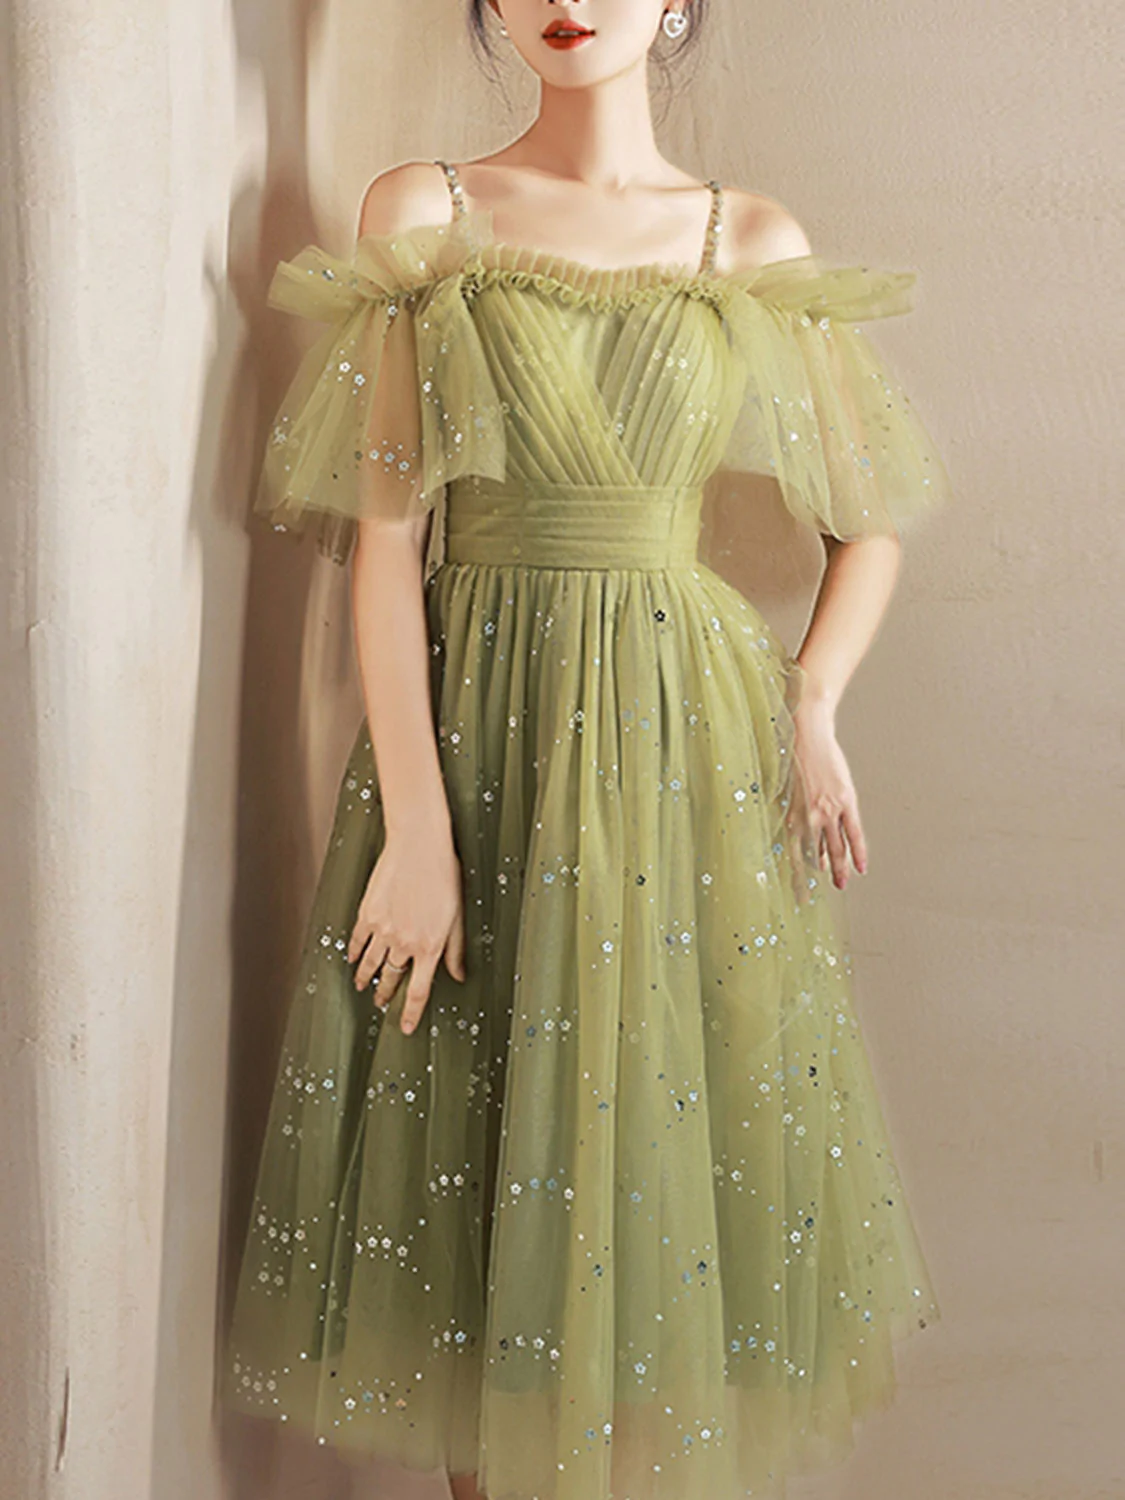 Light GreenTulle Short Party Dress Homecoming Dress, Green Prom Dress